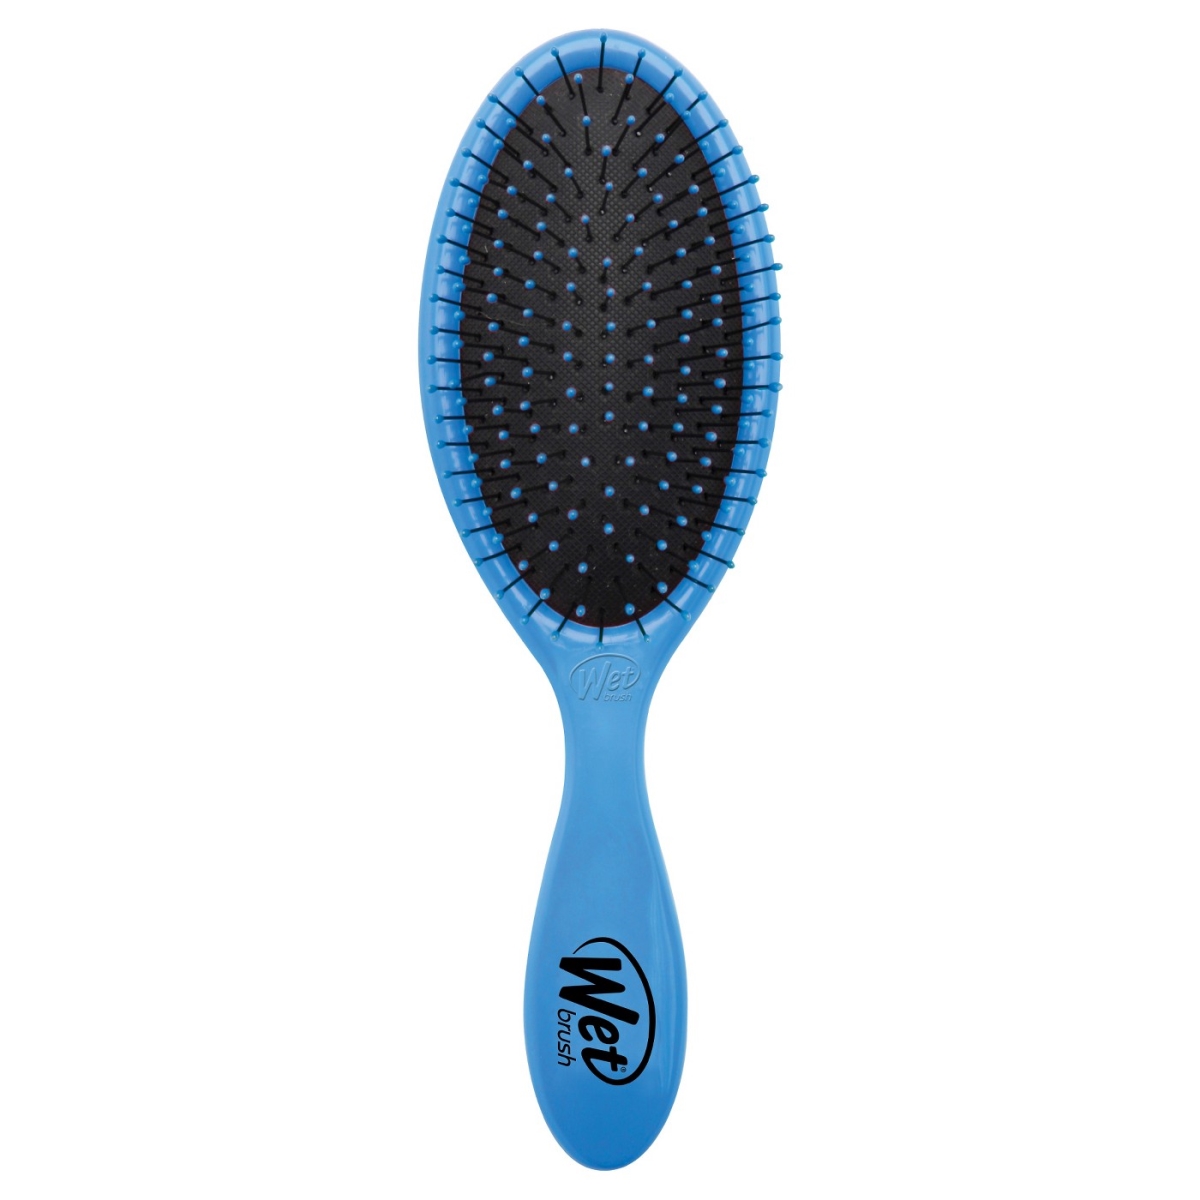 Jd Beauty - Us 7256728 Wet Hair Brush, Original Blue - Pack Of 4